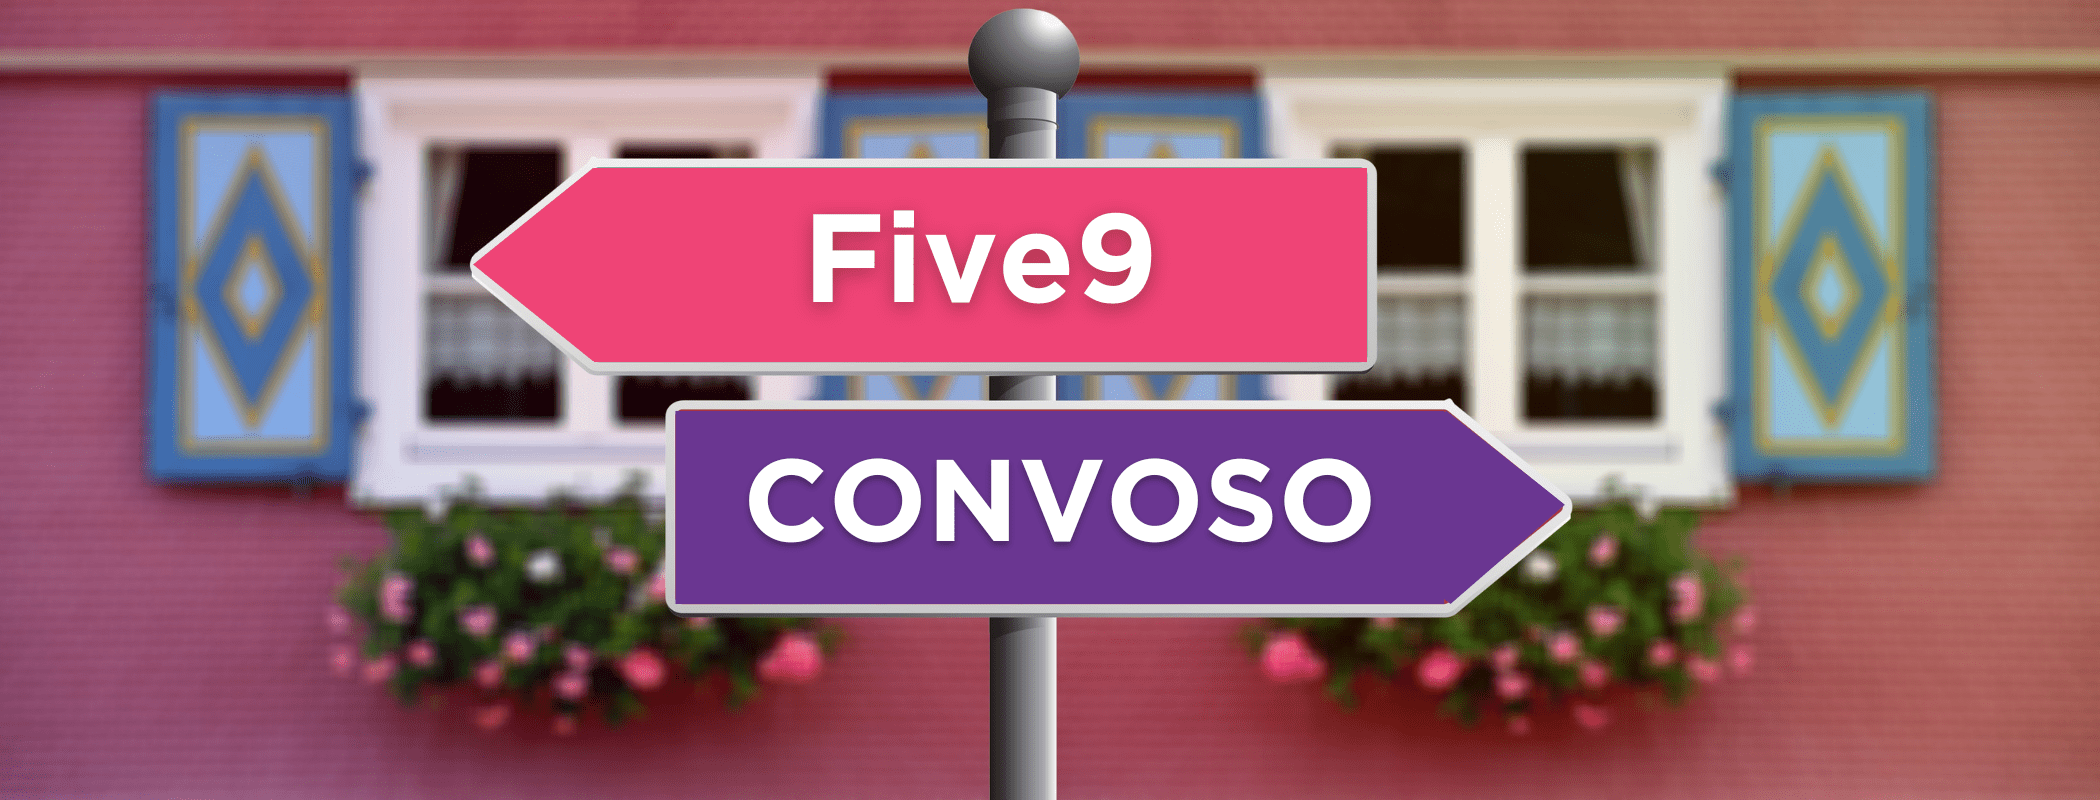 Convoso vs. Five9